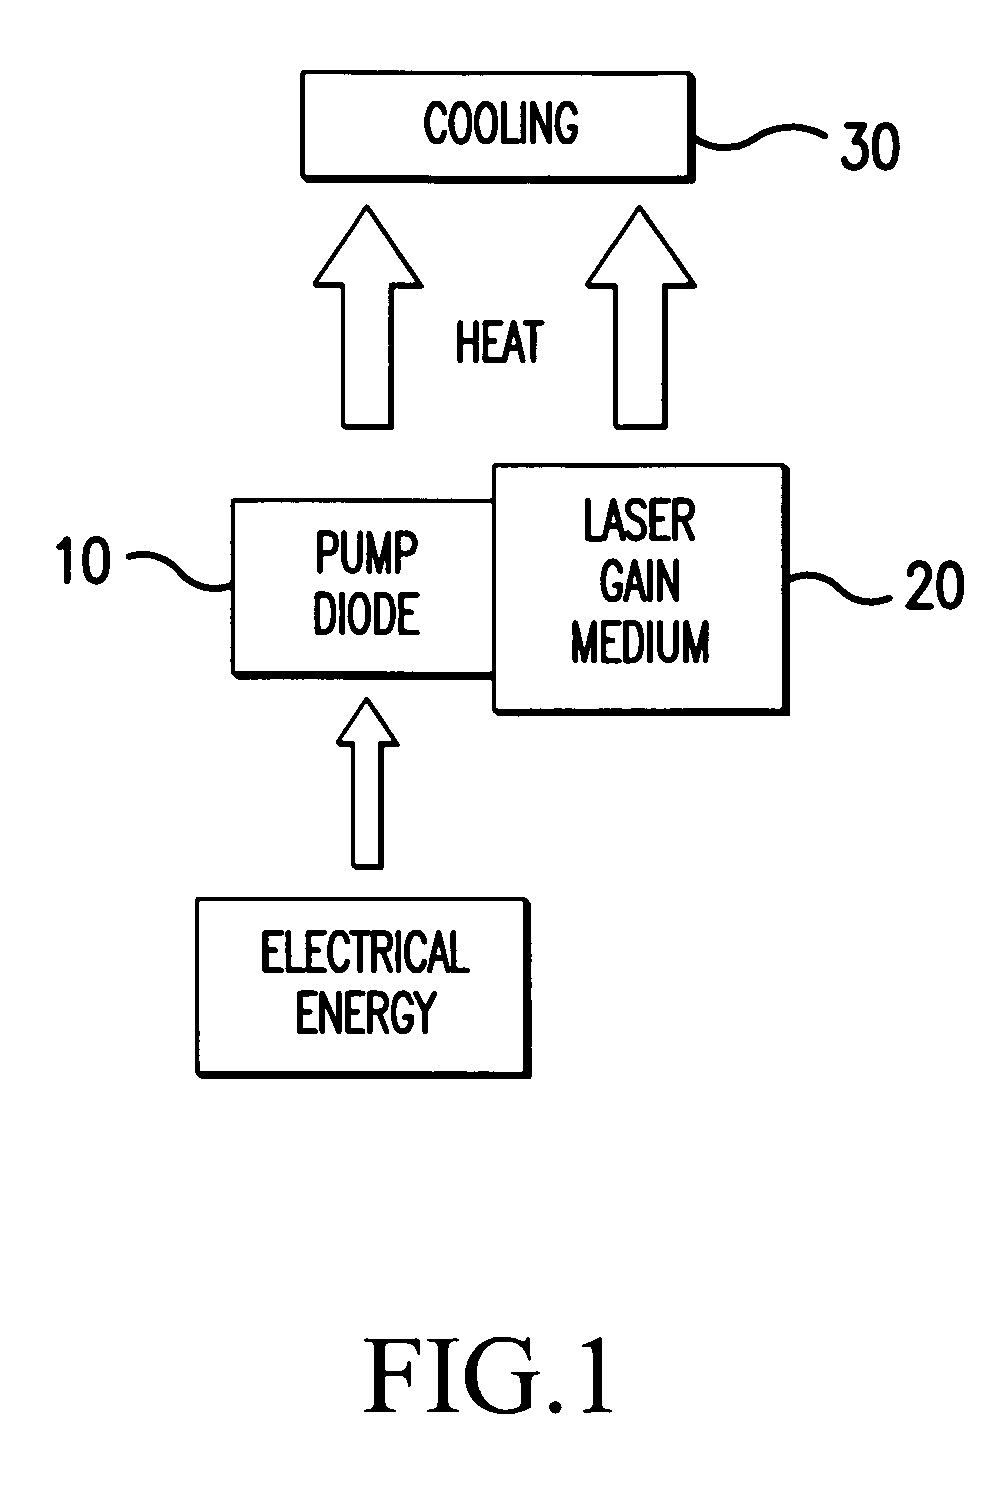 Diode pumping of a laser gain medium